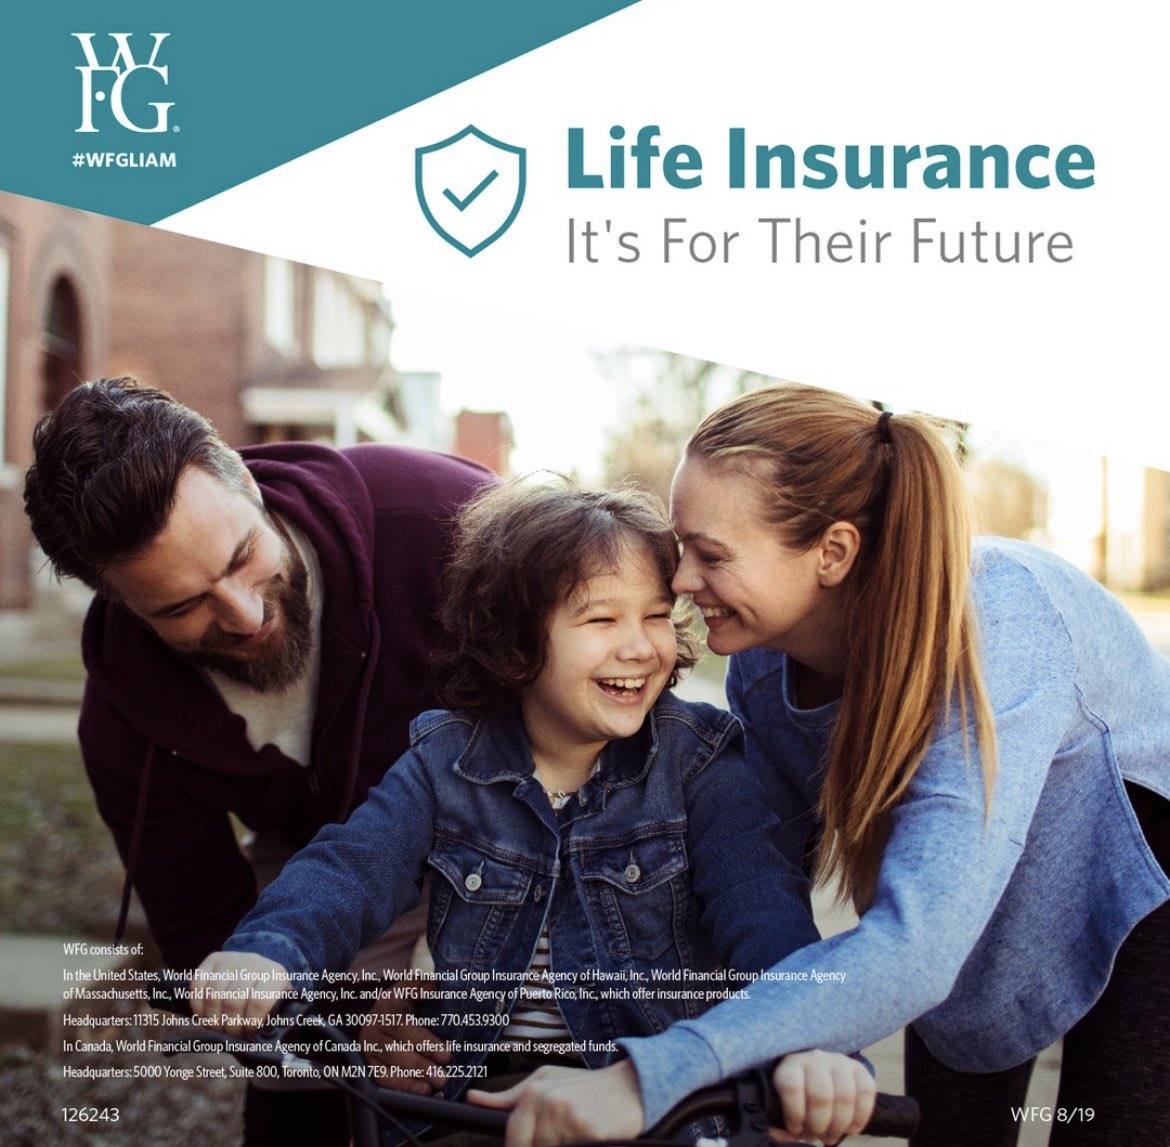 #757
#LifeInsurance 
#protectourfamilies